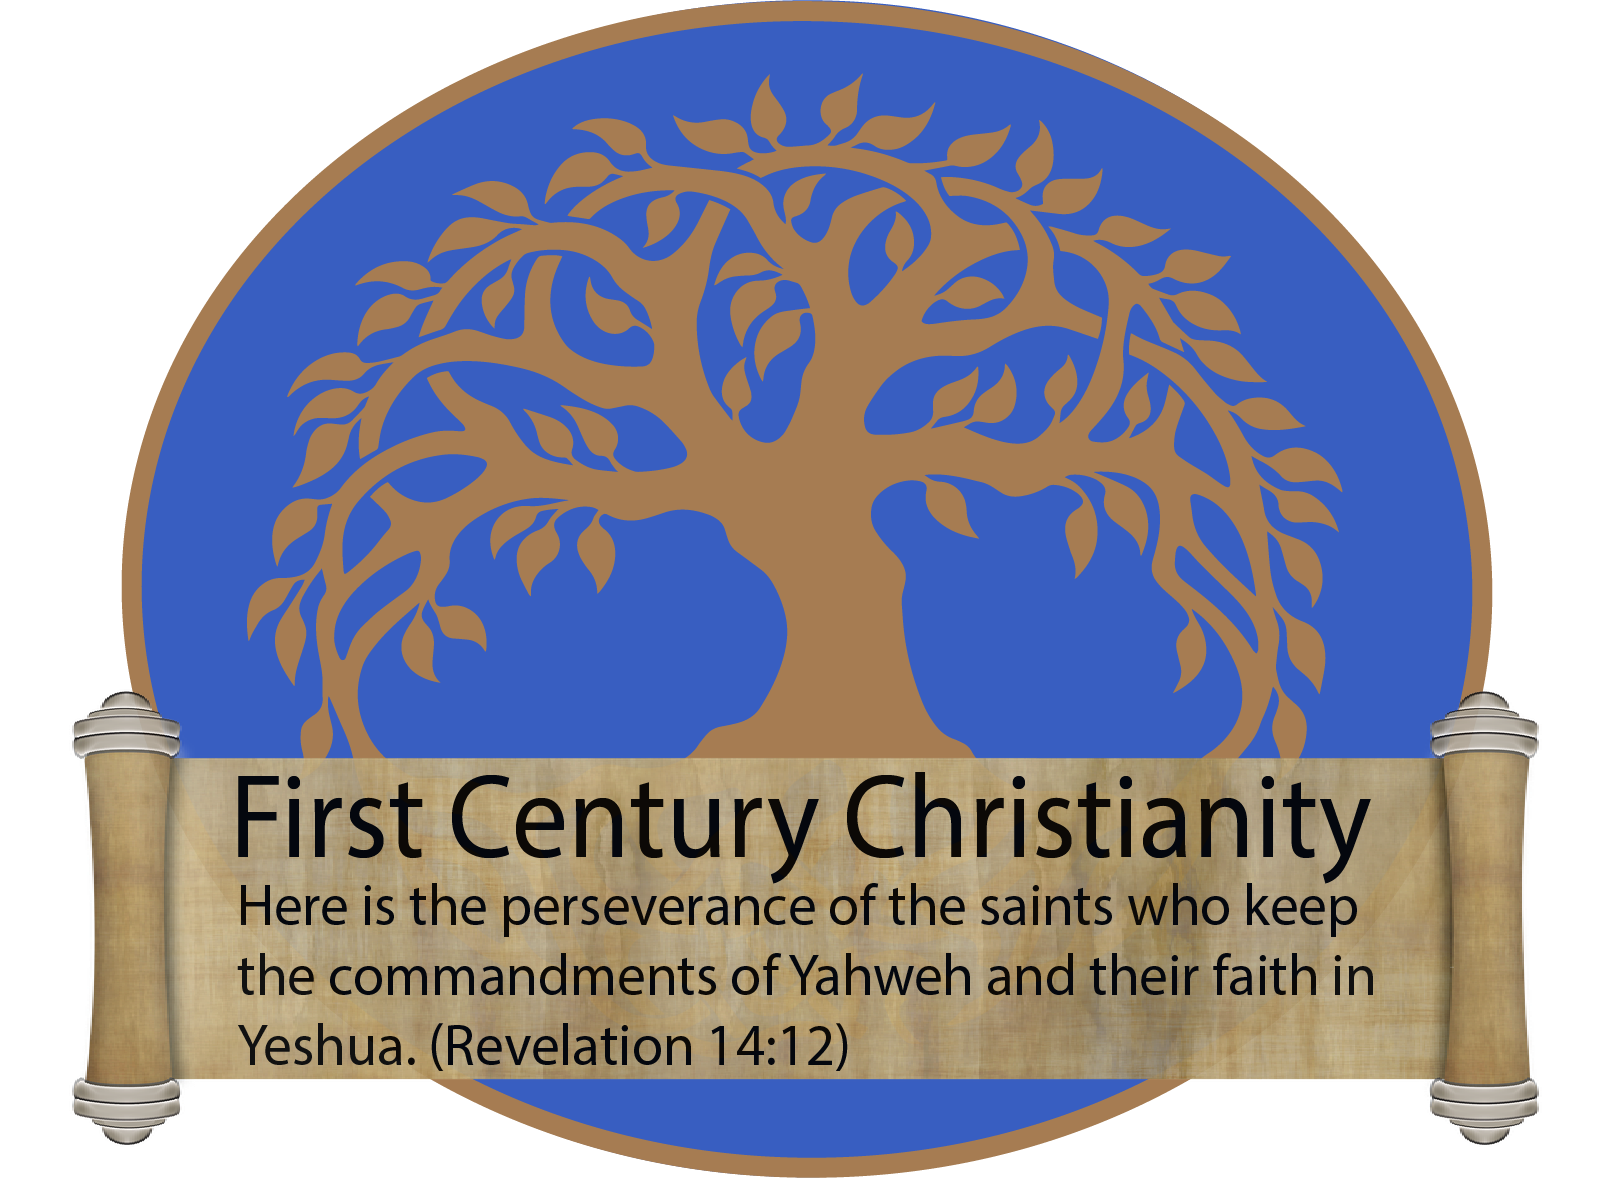 (c) Firstcenturychristianity.net